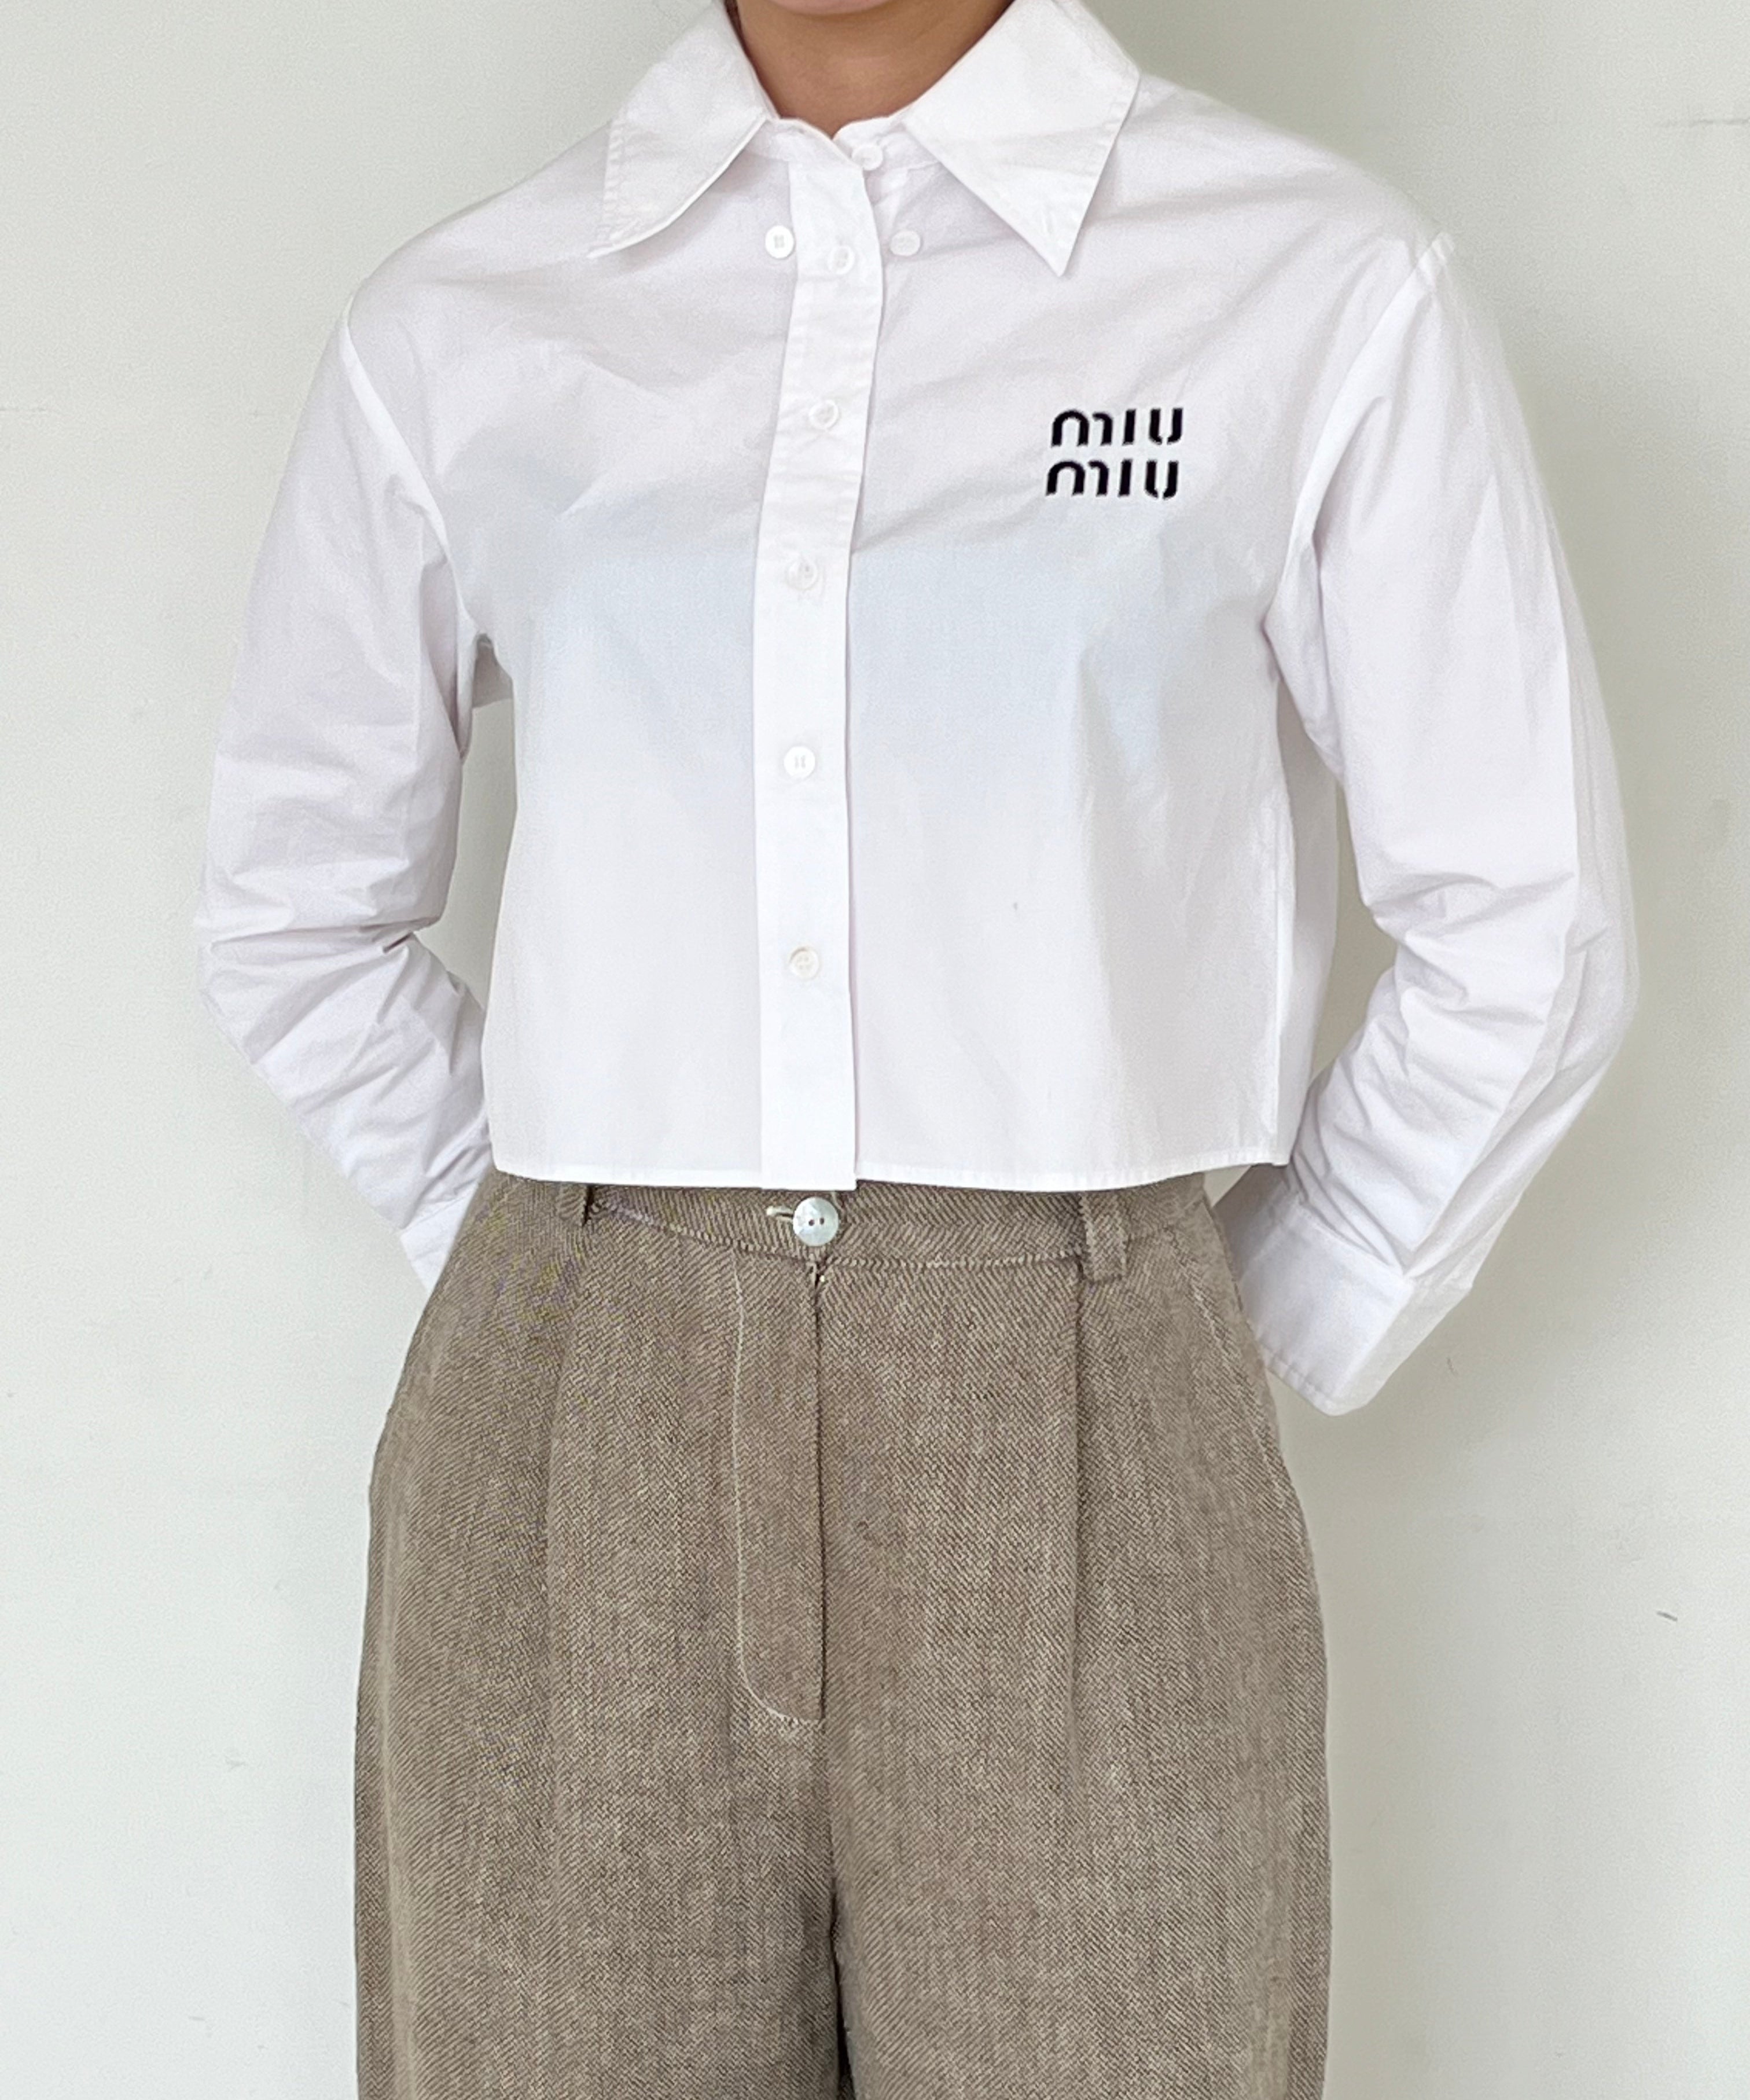 Miu Miu White  Long Sleeve Blouse With Collar & Button Detail